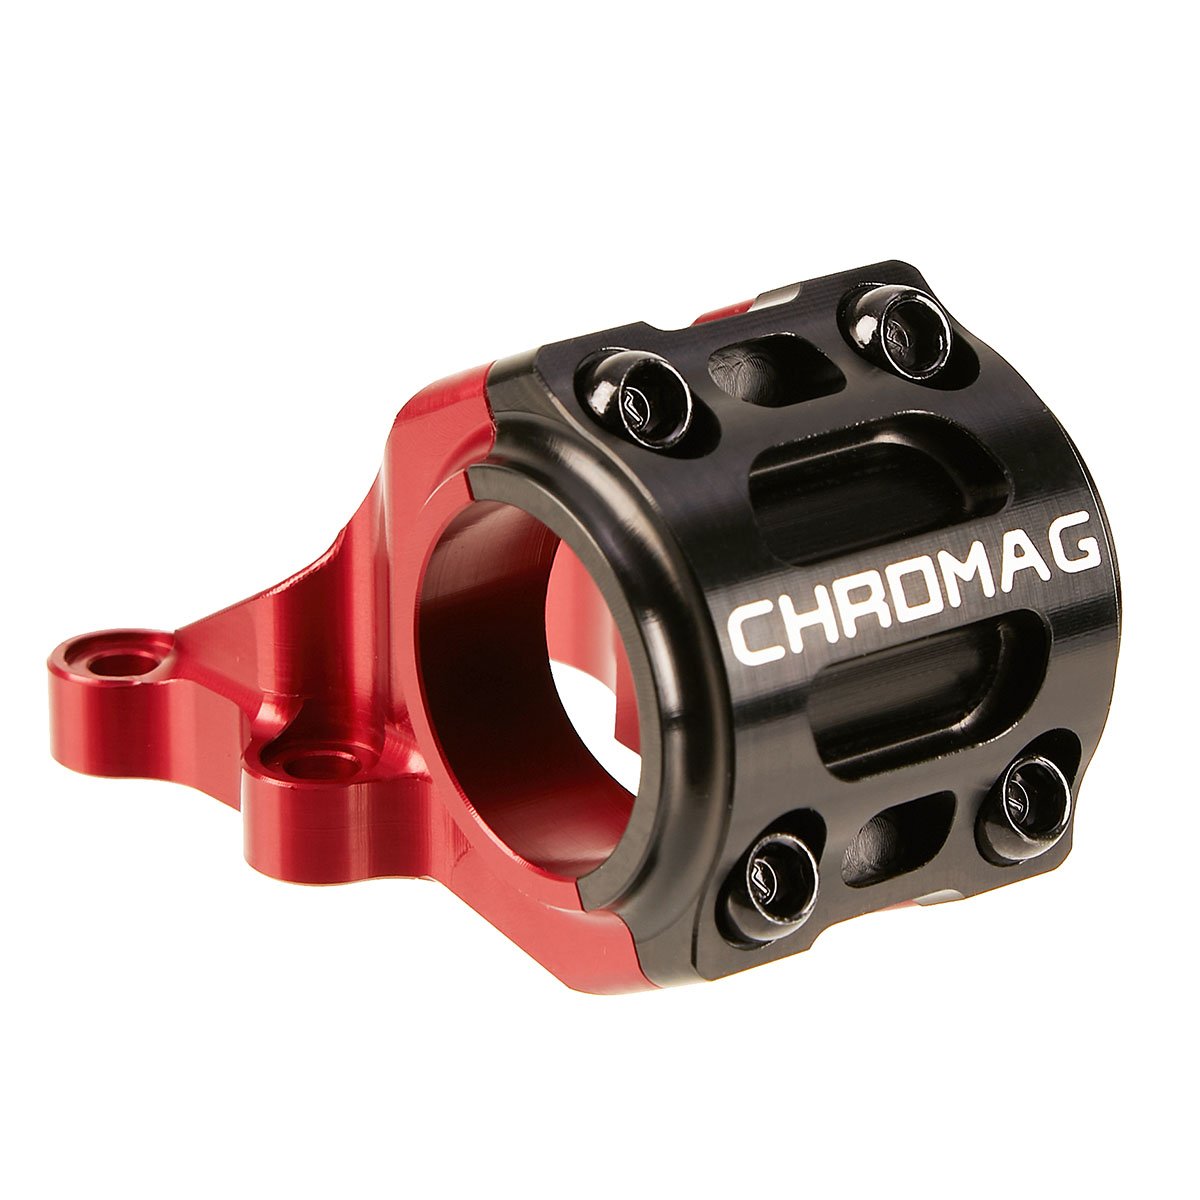 Chromag MTB Stem Director Direct Mount Red, 31.8 mm, 47 mm Reach